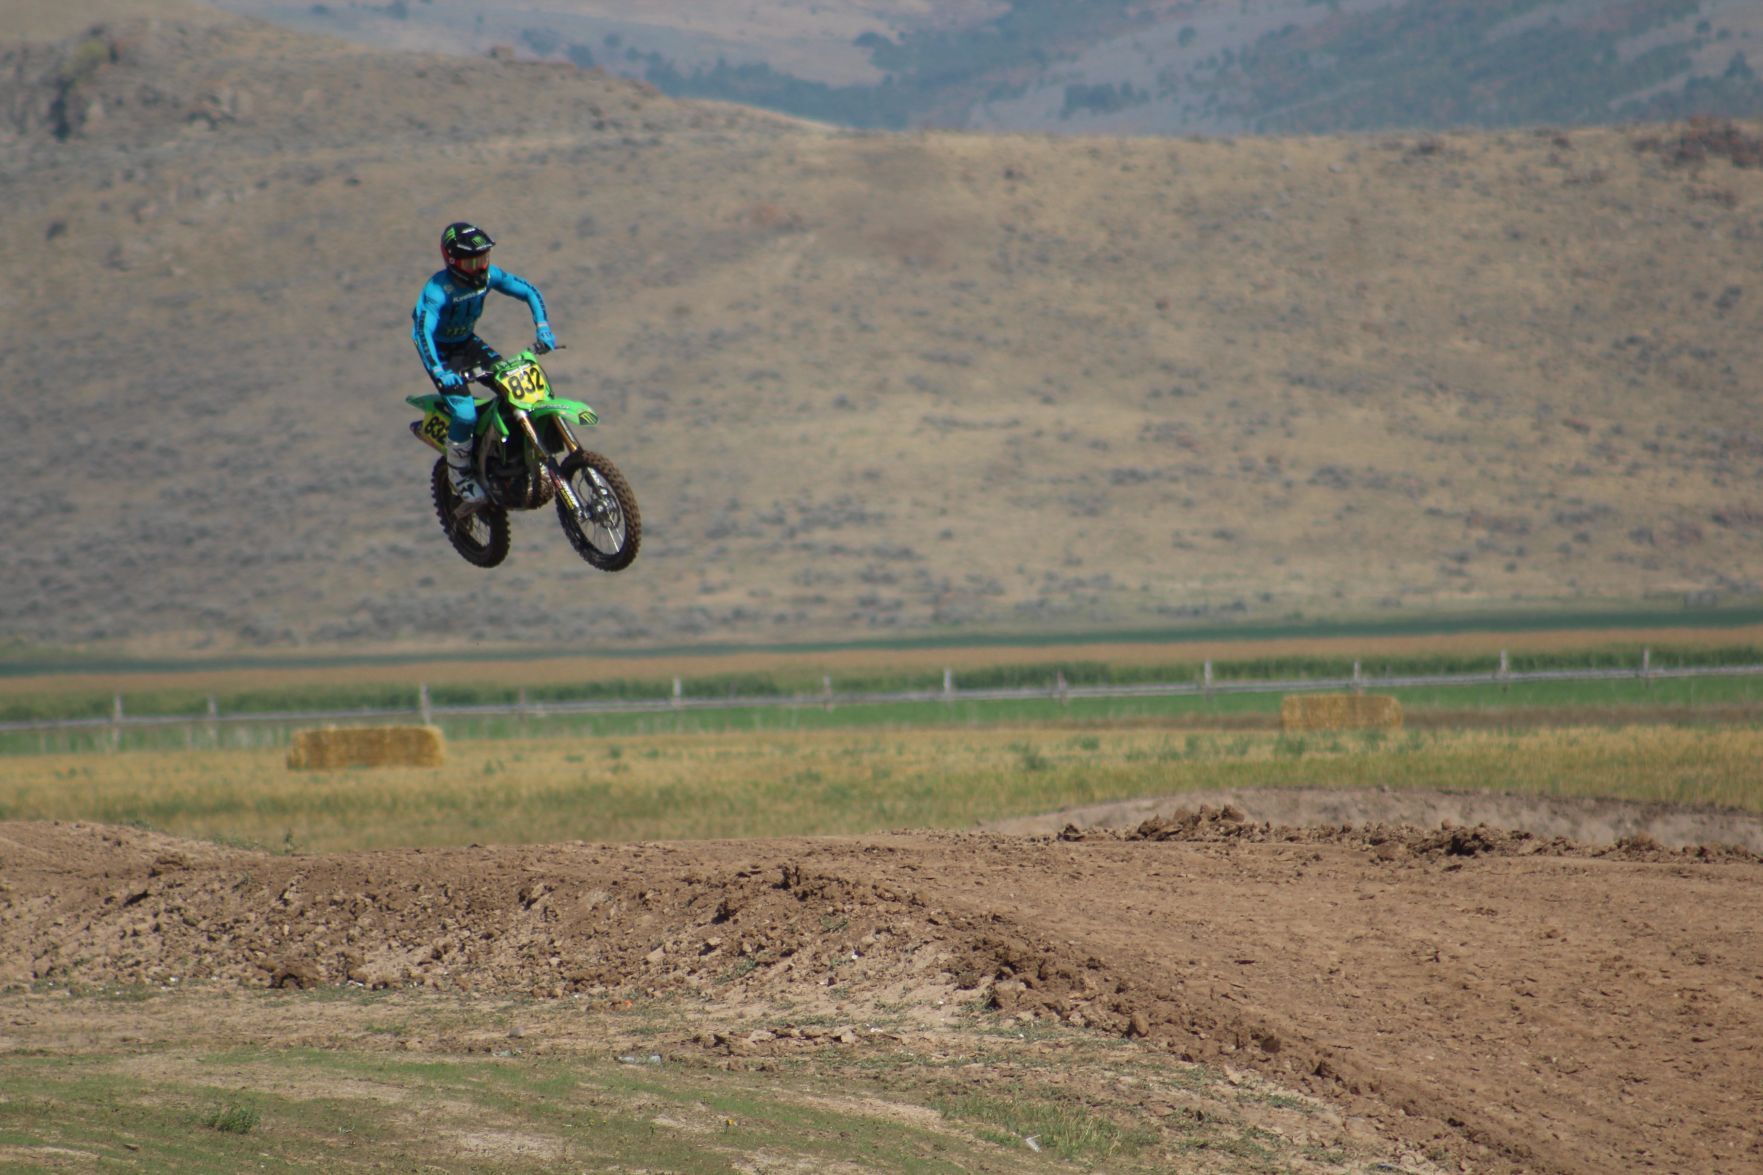 Fairviews field of dreams helped put Idaho on motocross map Local News hjnews